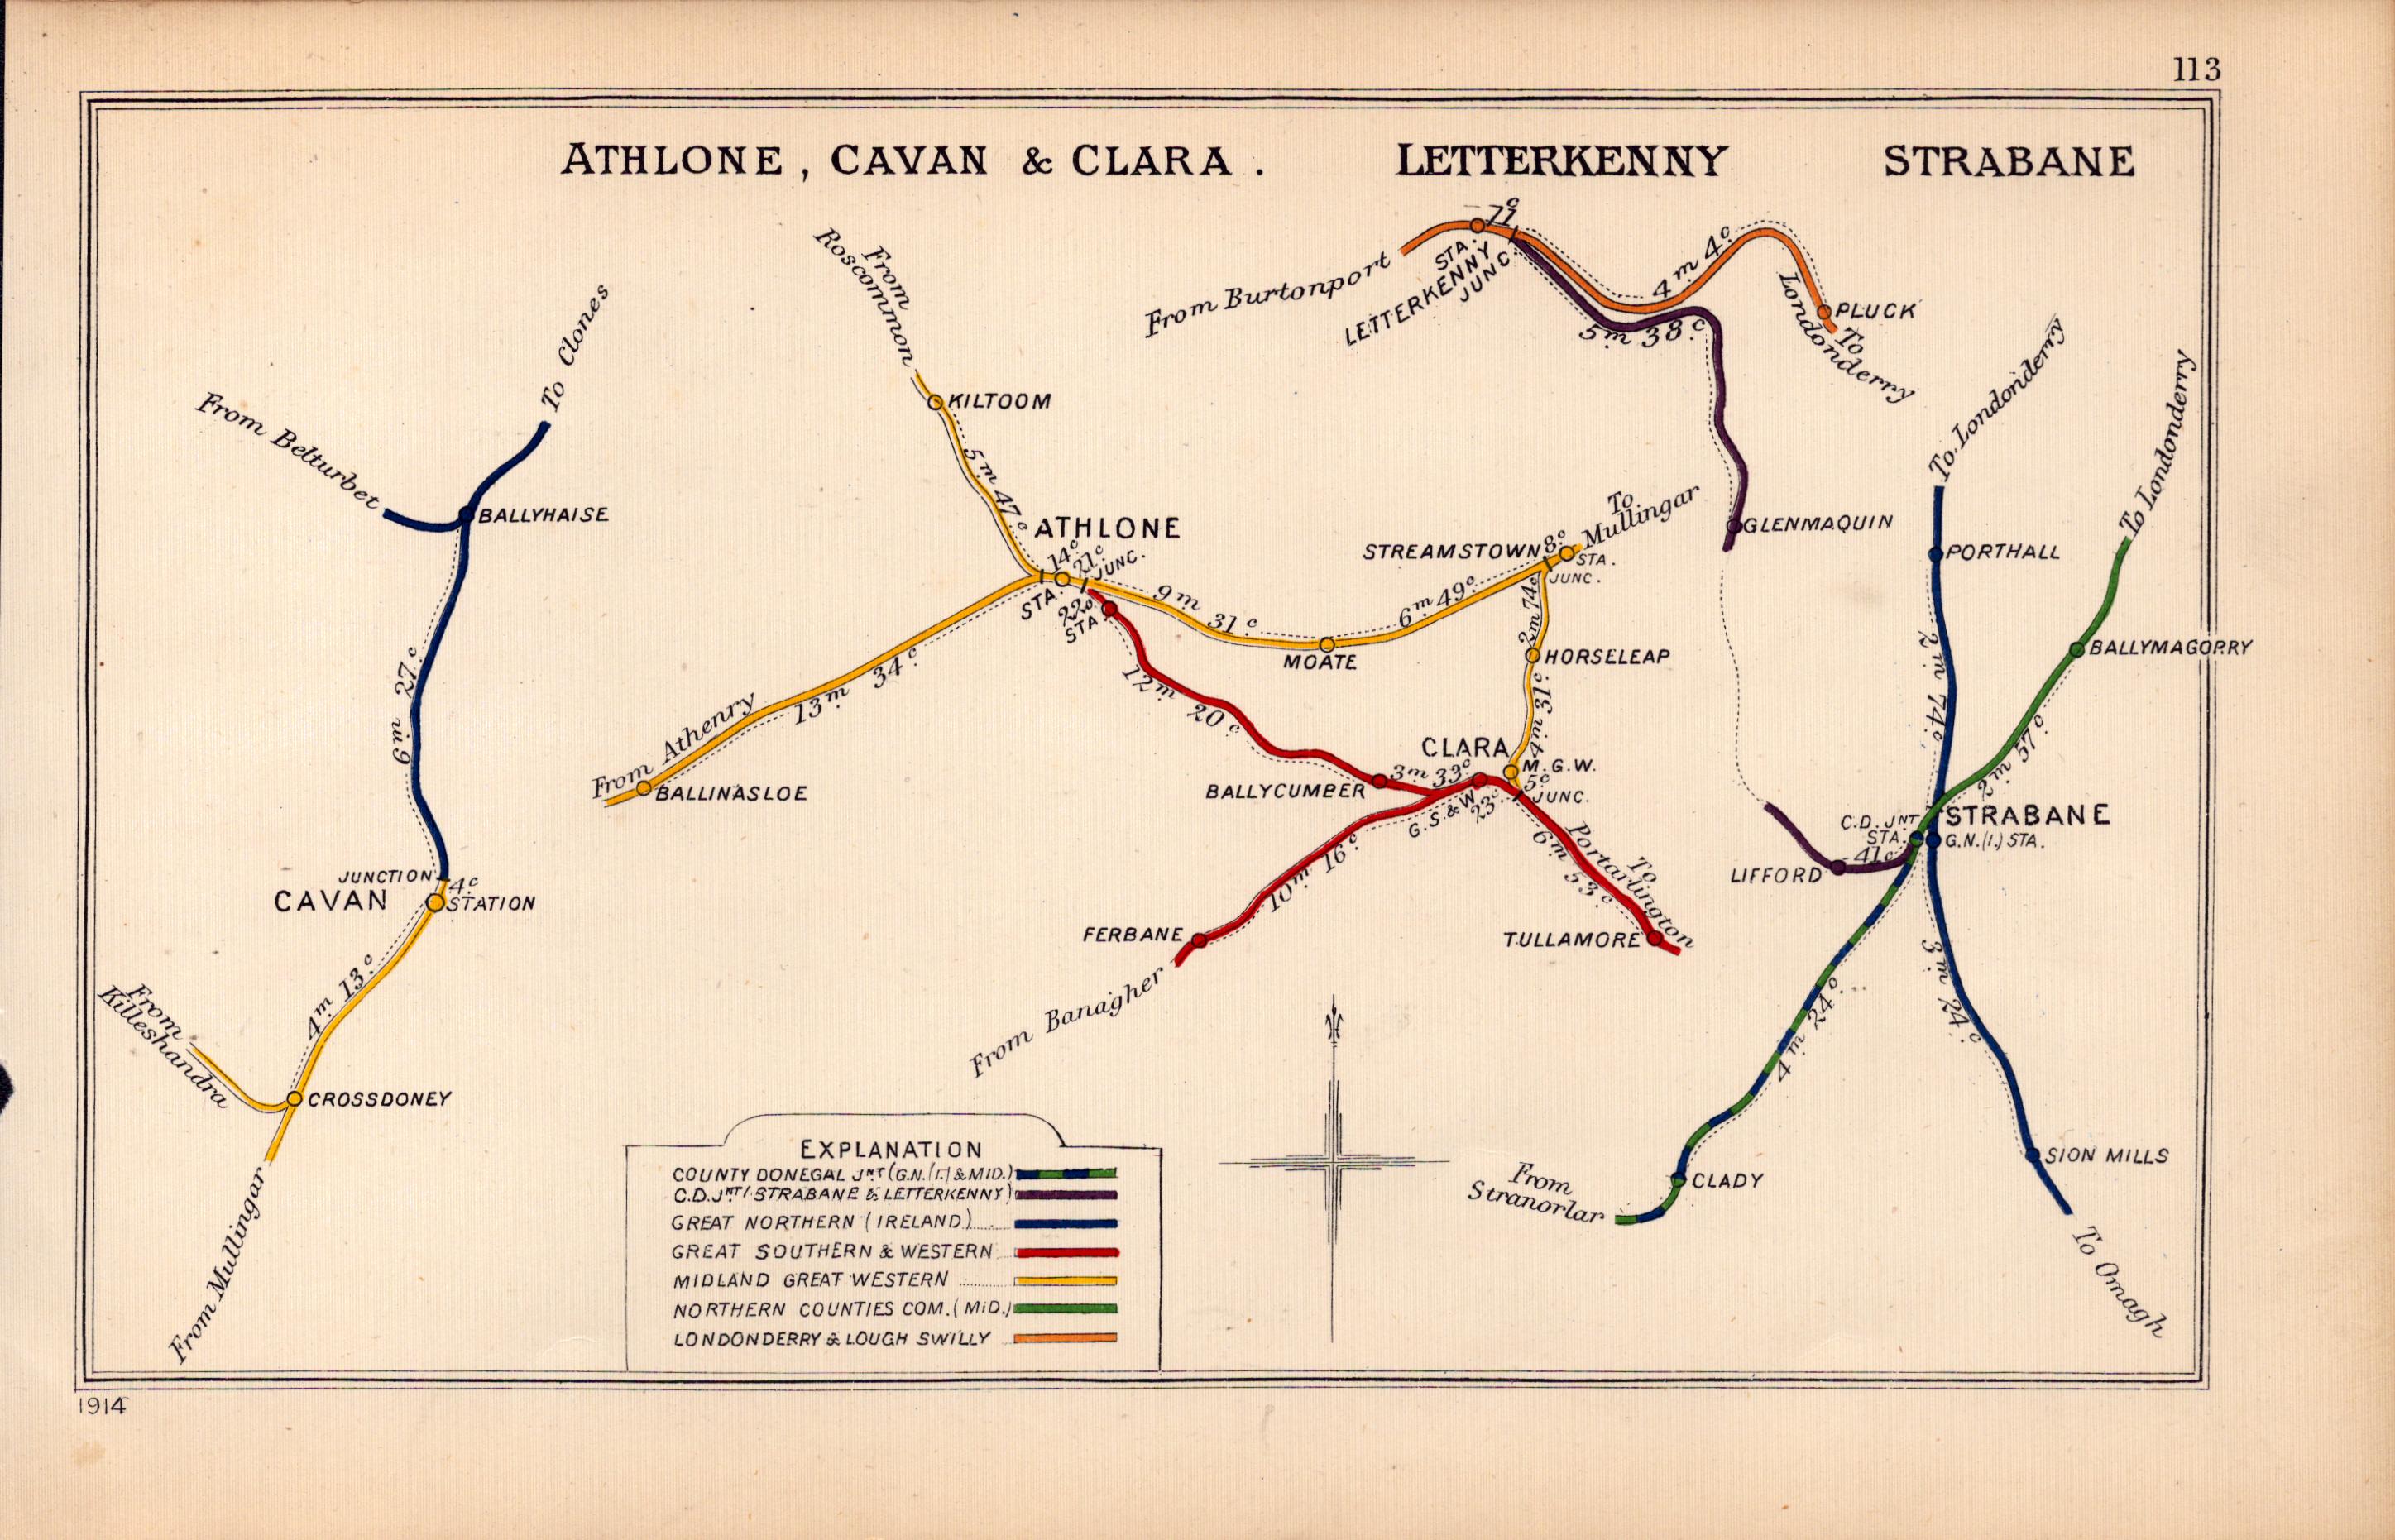 Athlone Cavan Letterkenny Strabane Ireland Antique Railway Diagram-113.